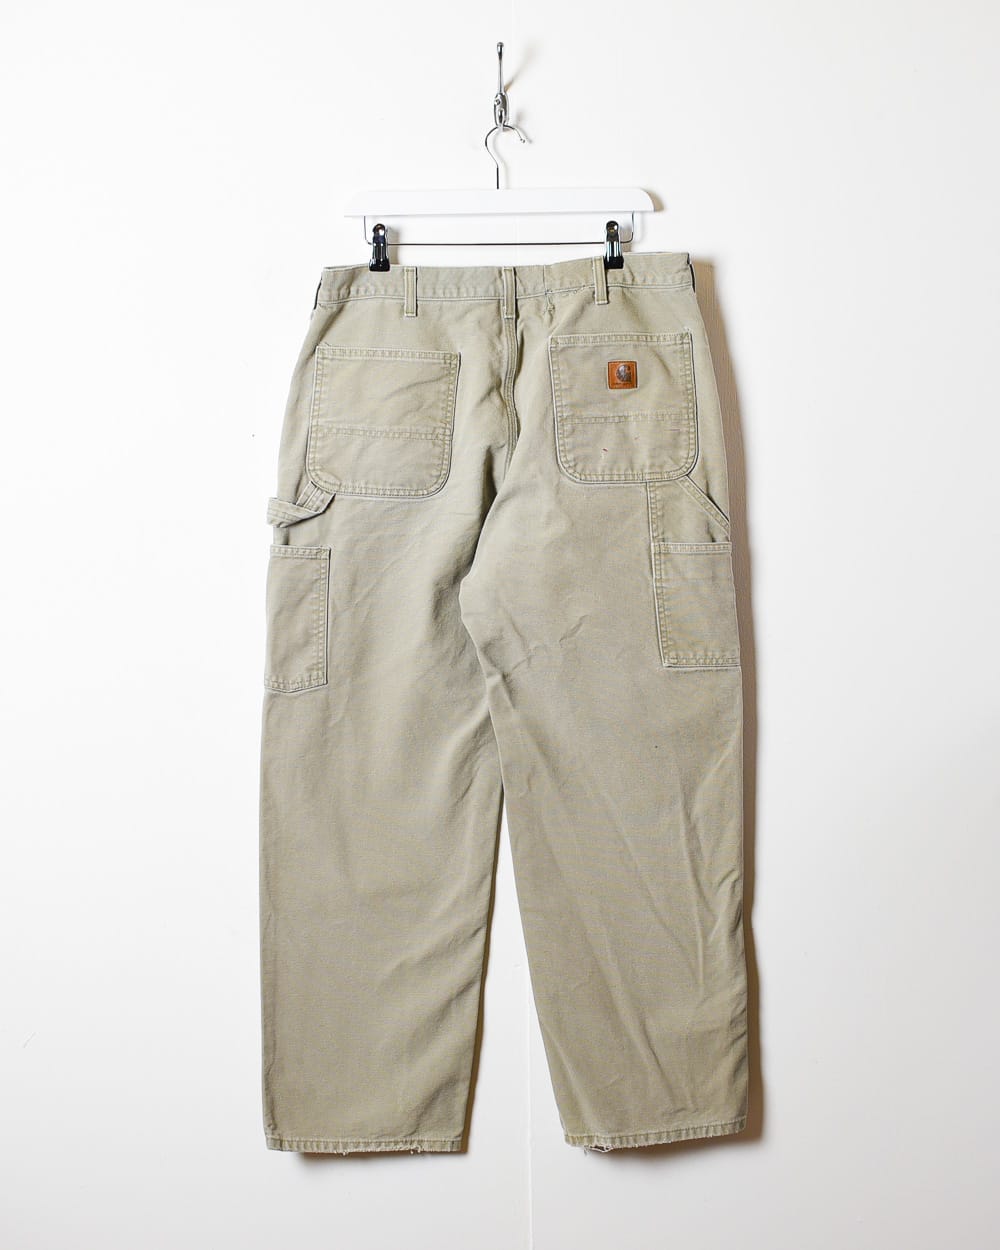 Stone Carhartt Carpenter Jeans - W34 L29